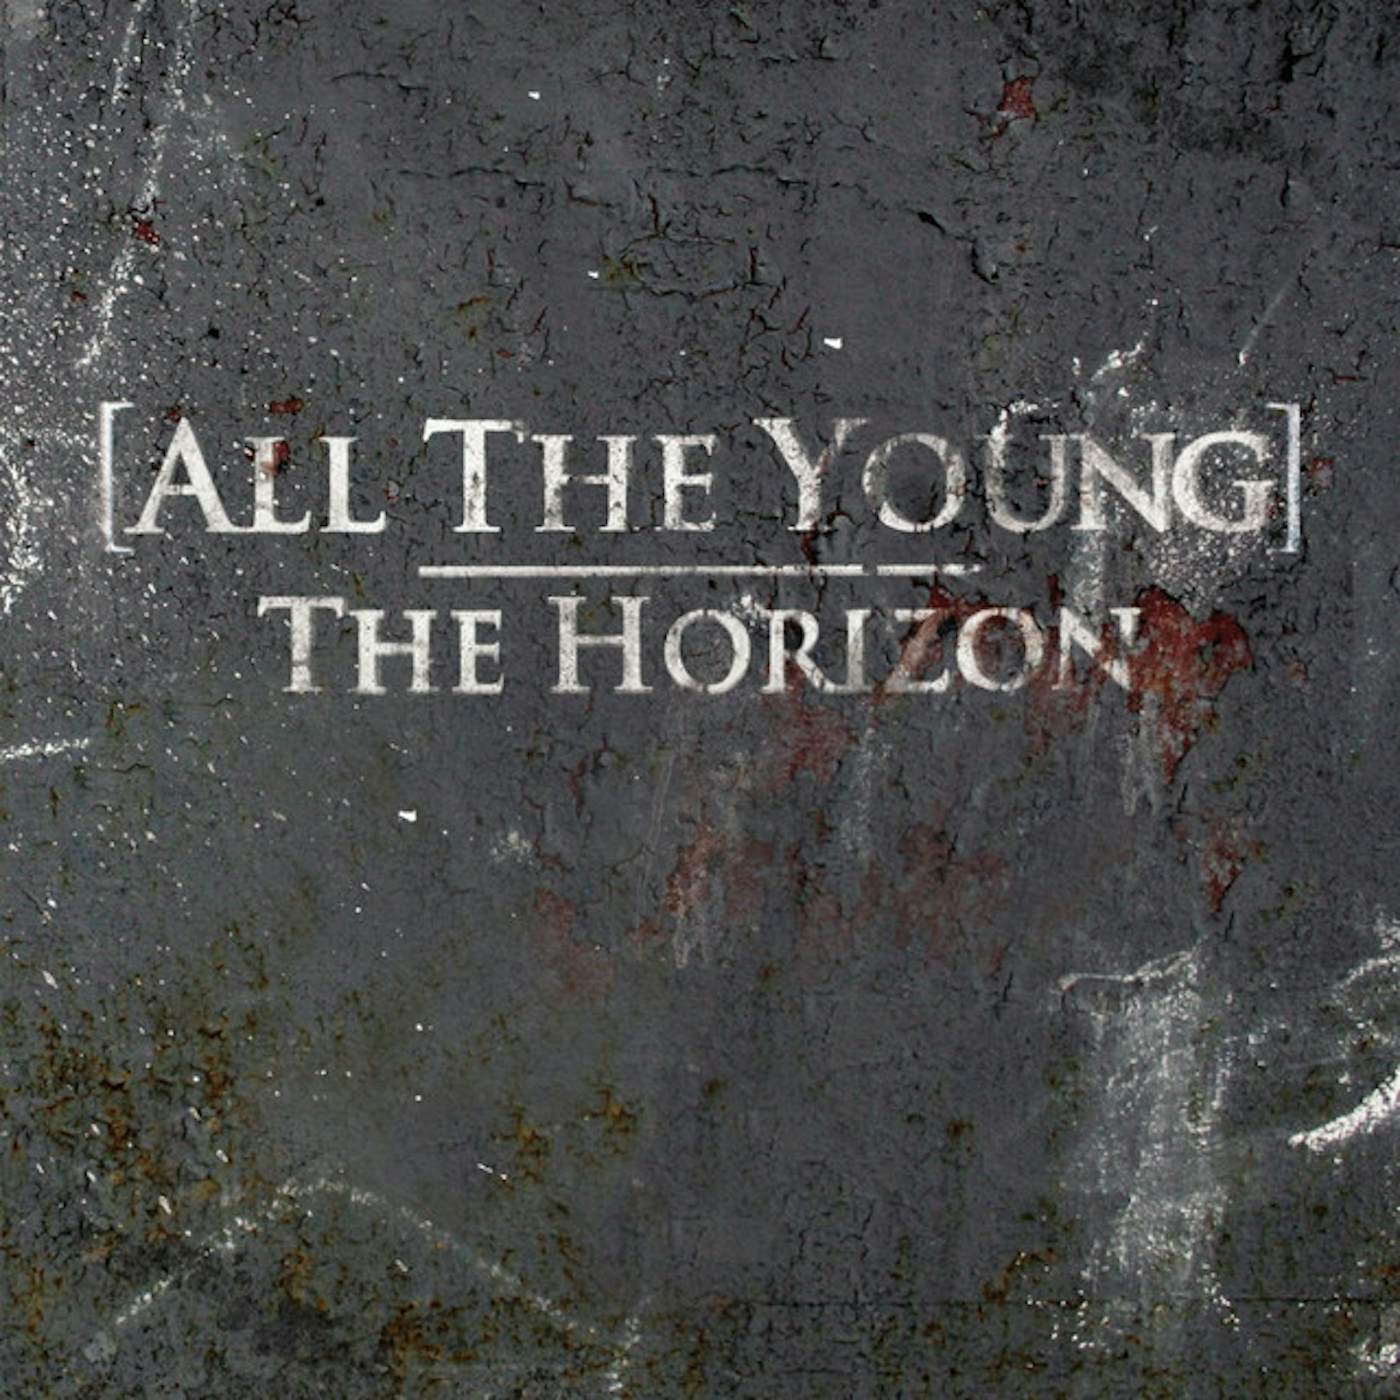 All The Young HORIZON Vinyl Record